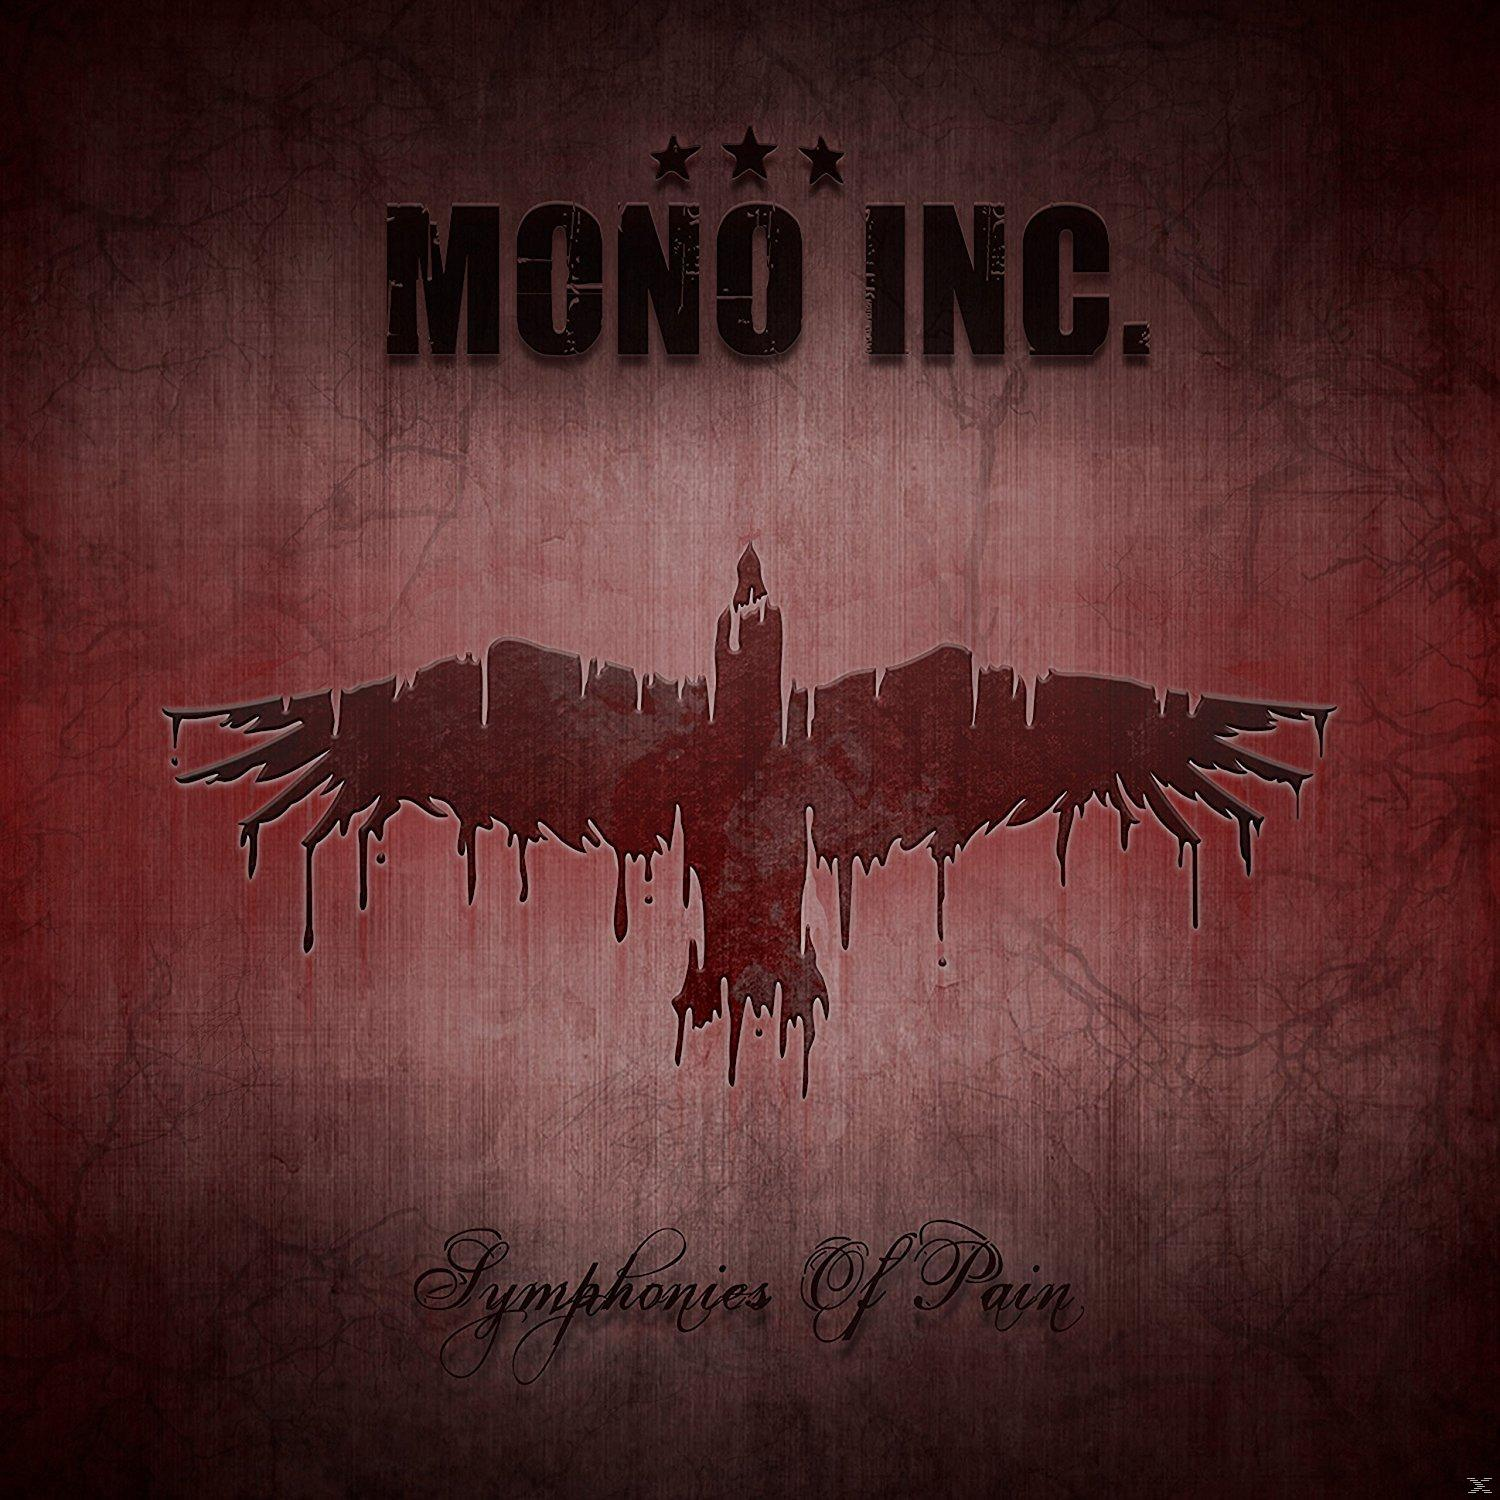 Mono Inc. - And Symphonies Rarities Pain-Hits (CD) - Of